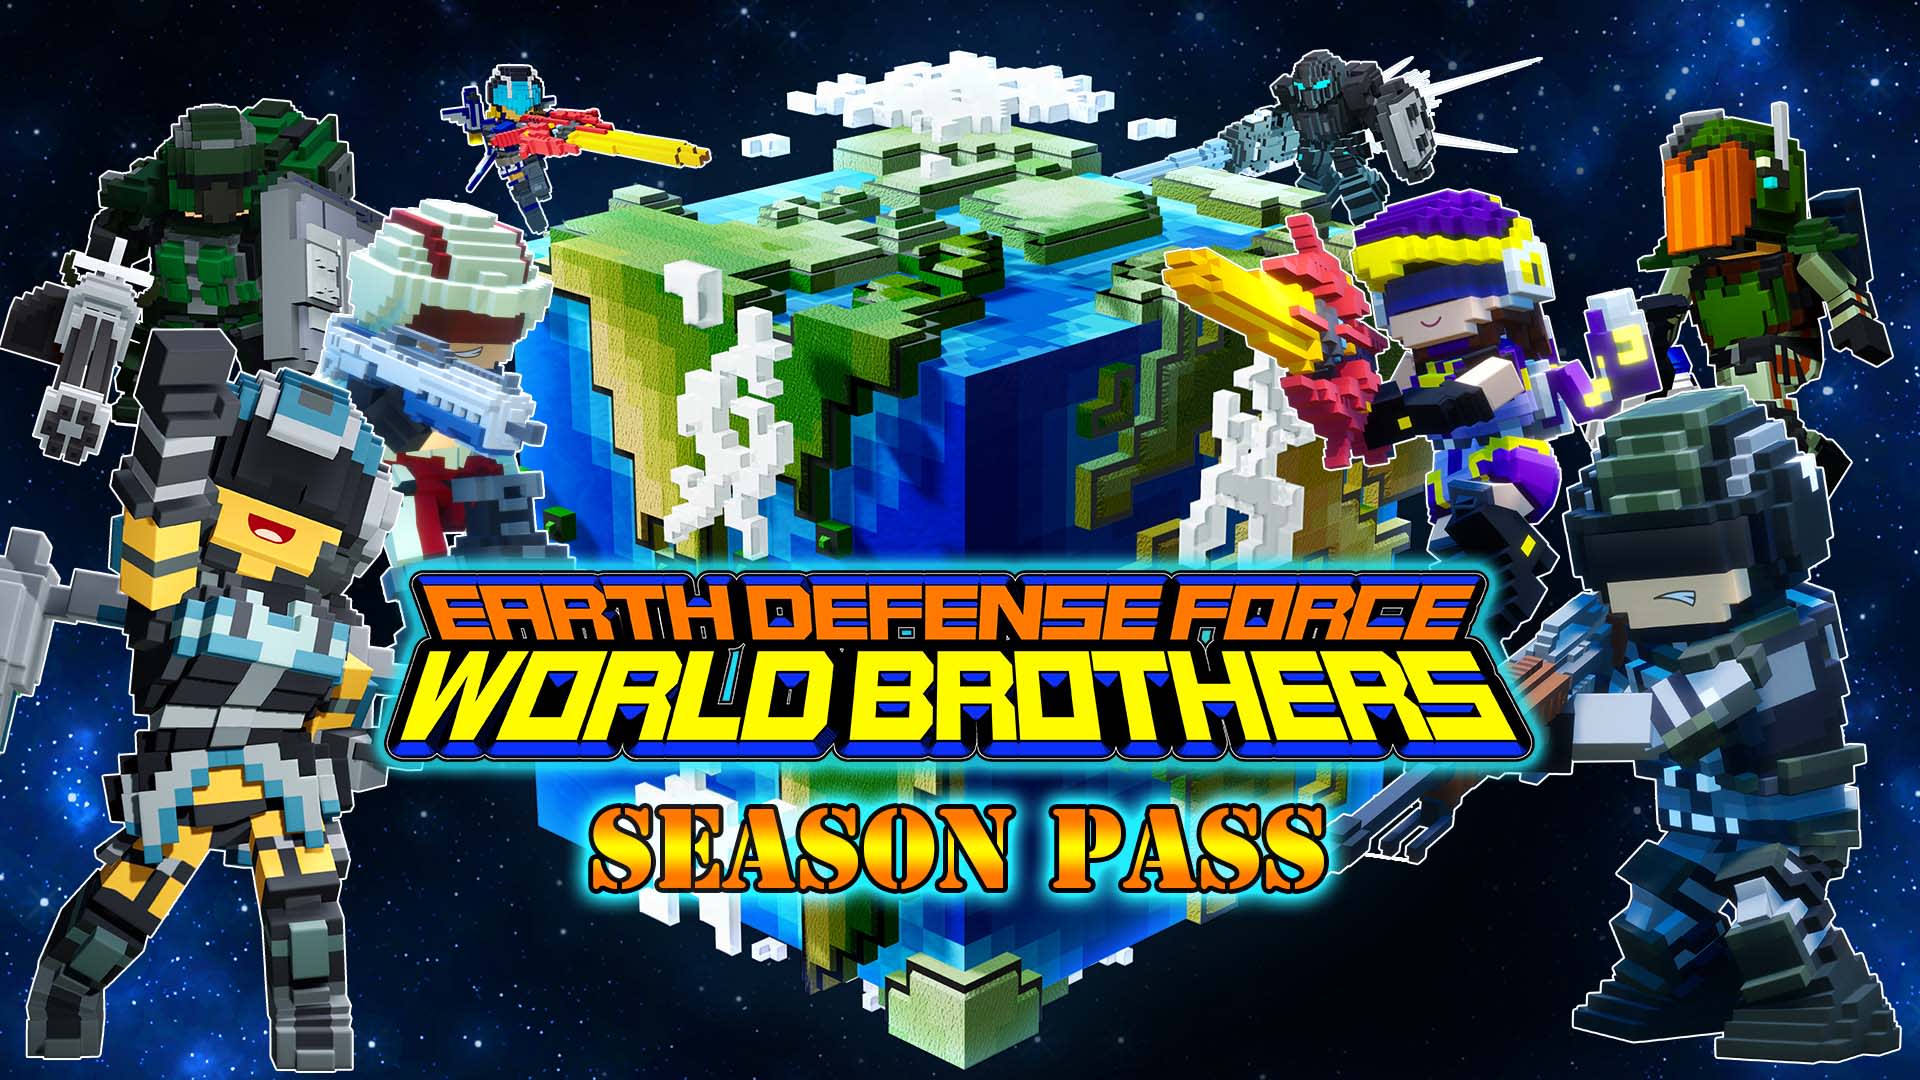 EARTH DEFENSE FORCE: WORLD BROTHERS_SEASON PASS